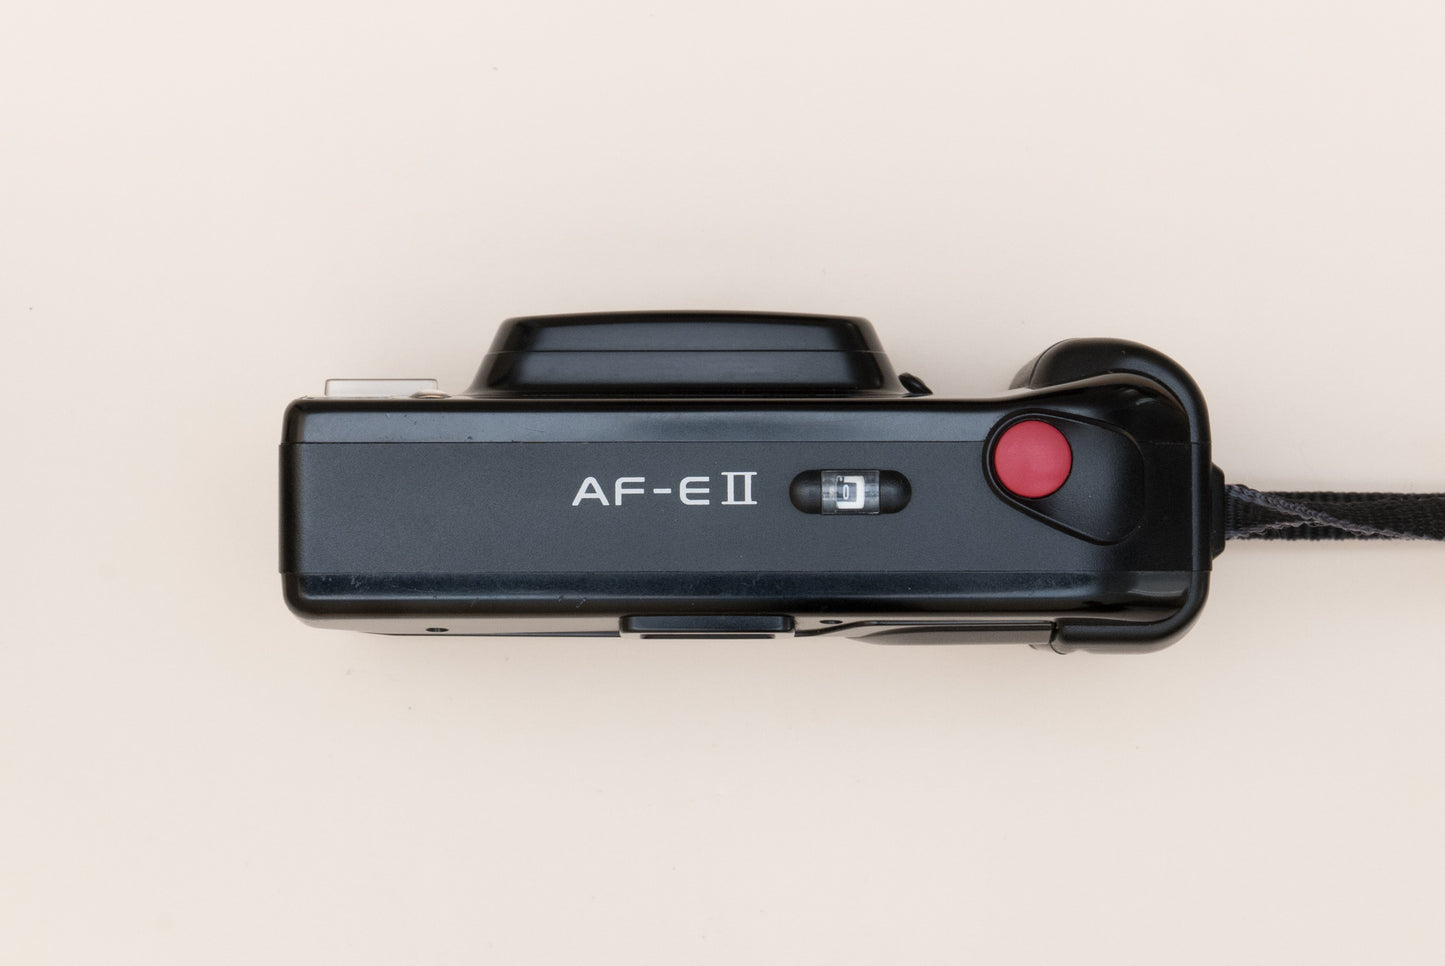 Minolta AF-E II Compact 35mm Point and Shoot Film Camera